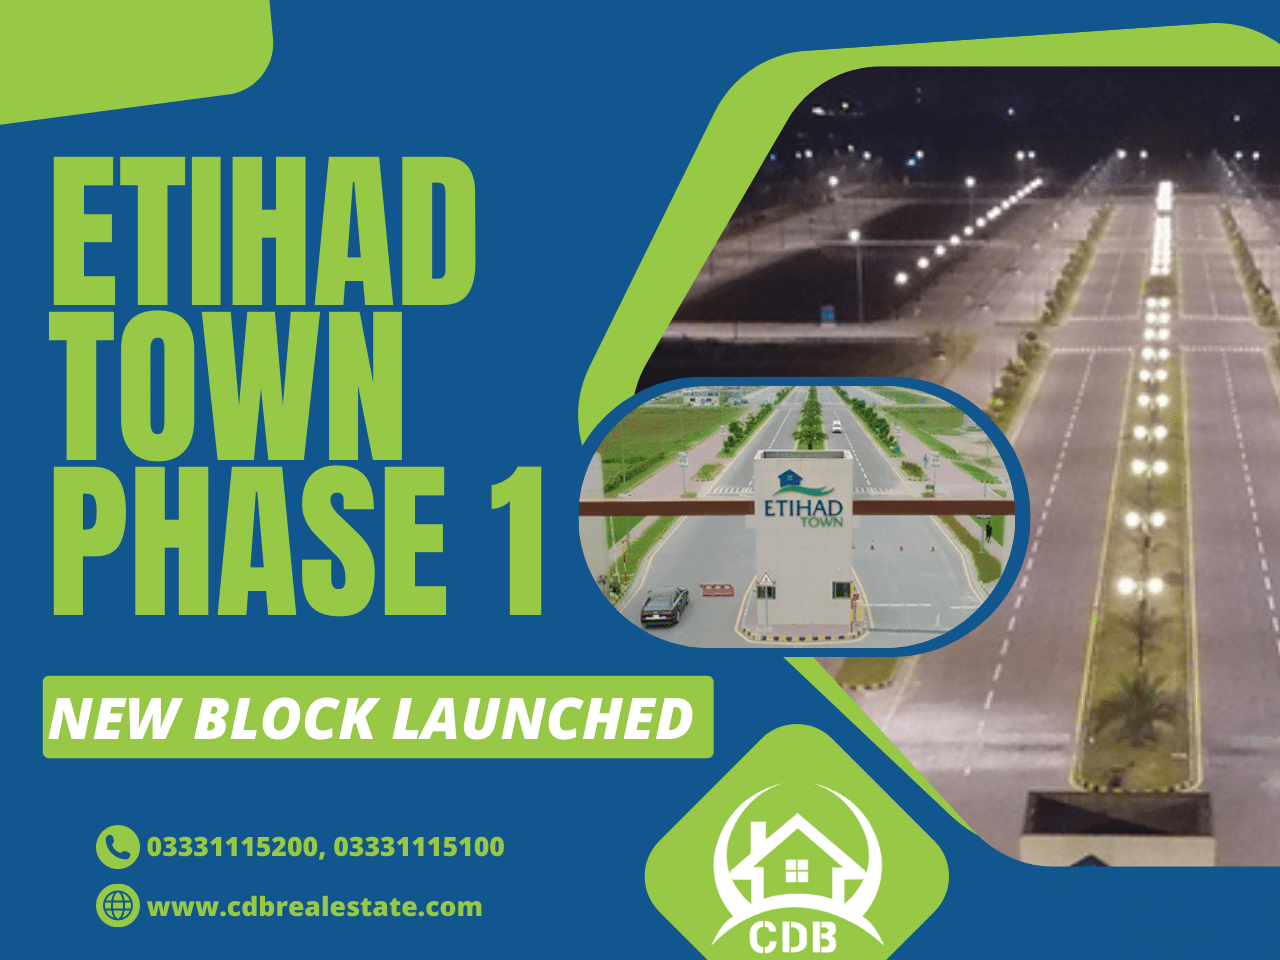 etihad town phase 1 new block